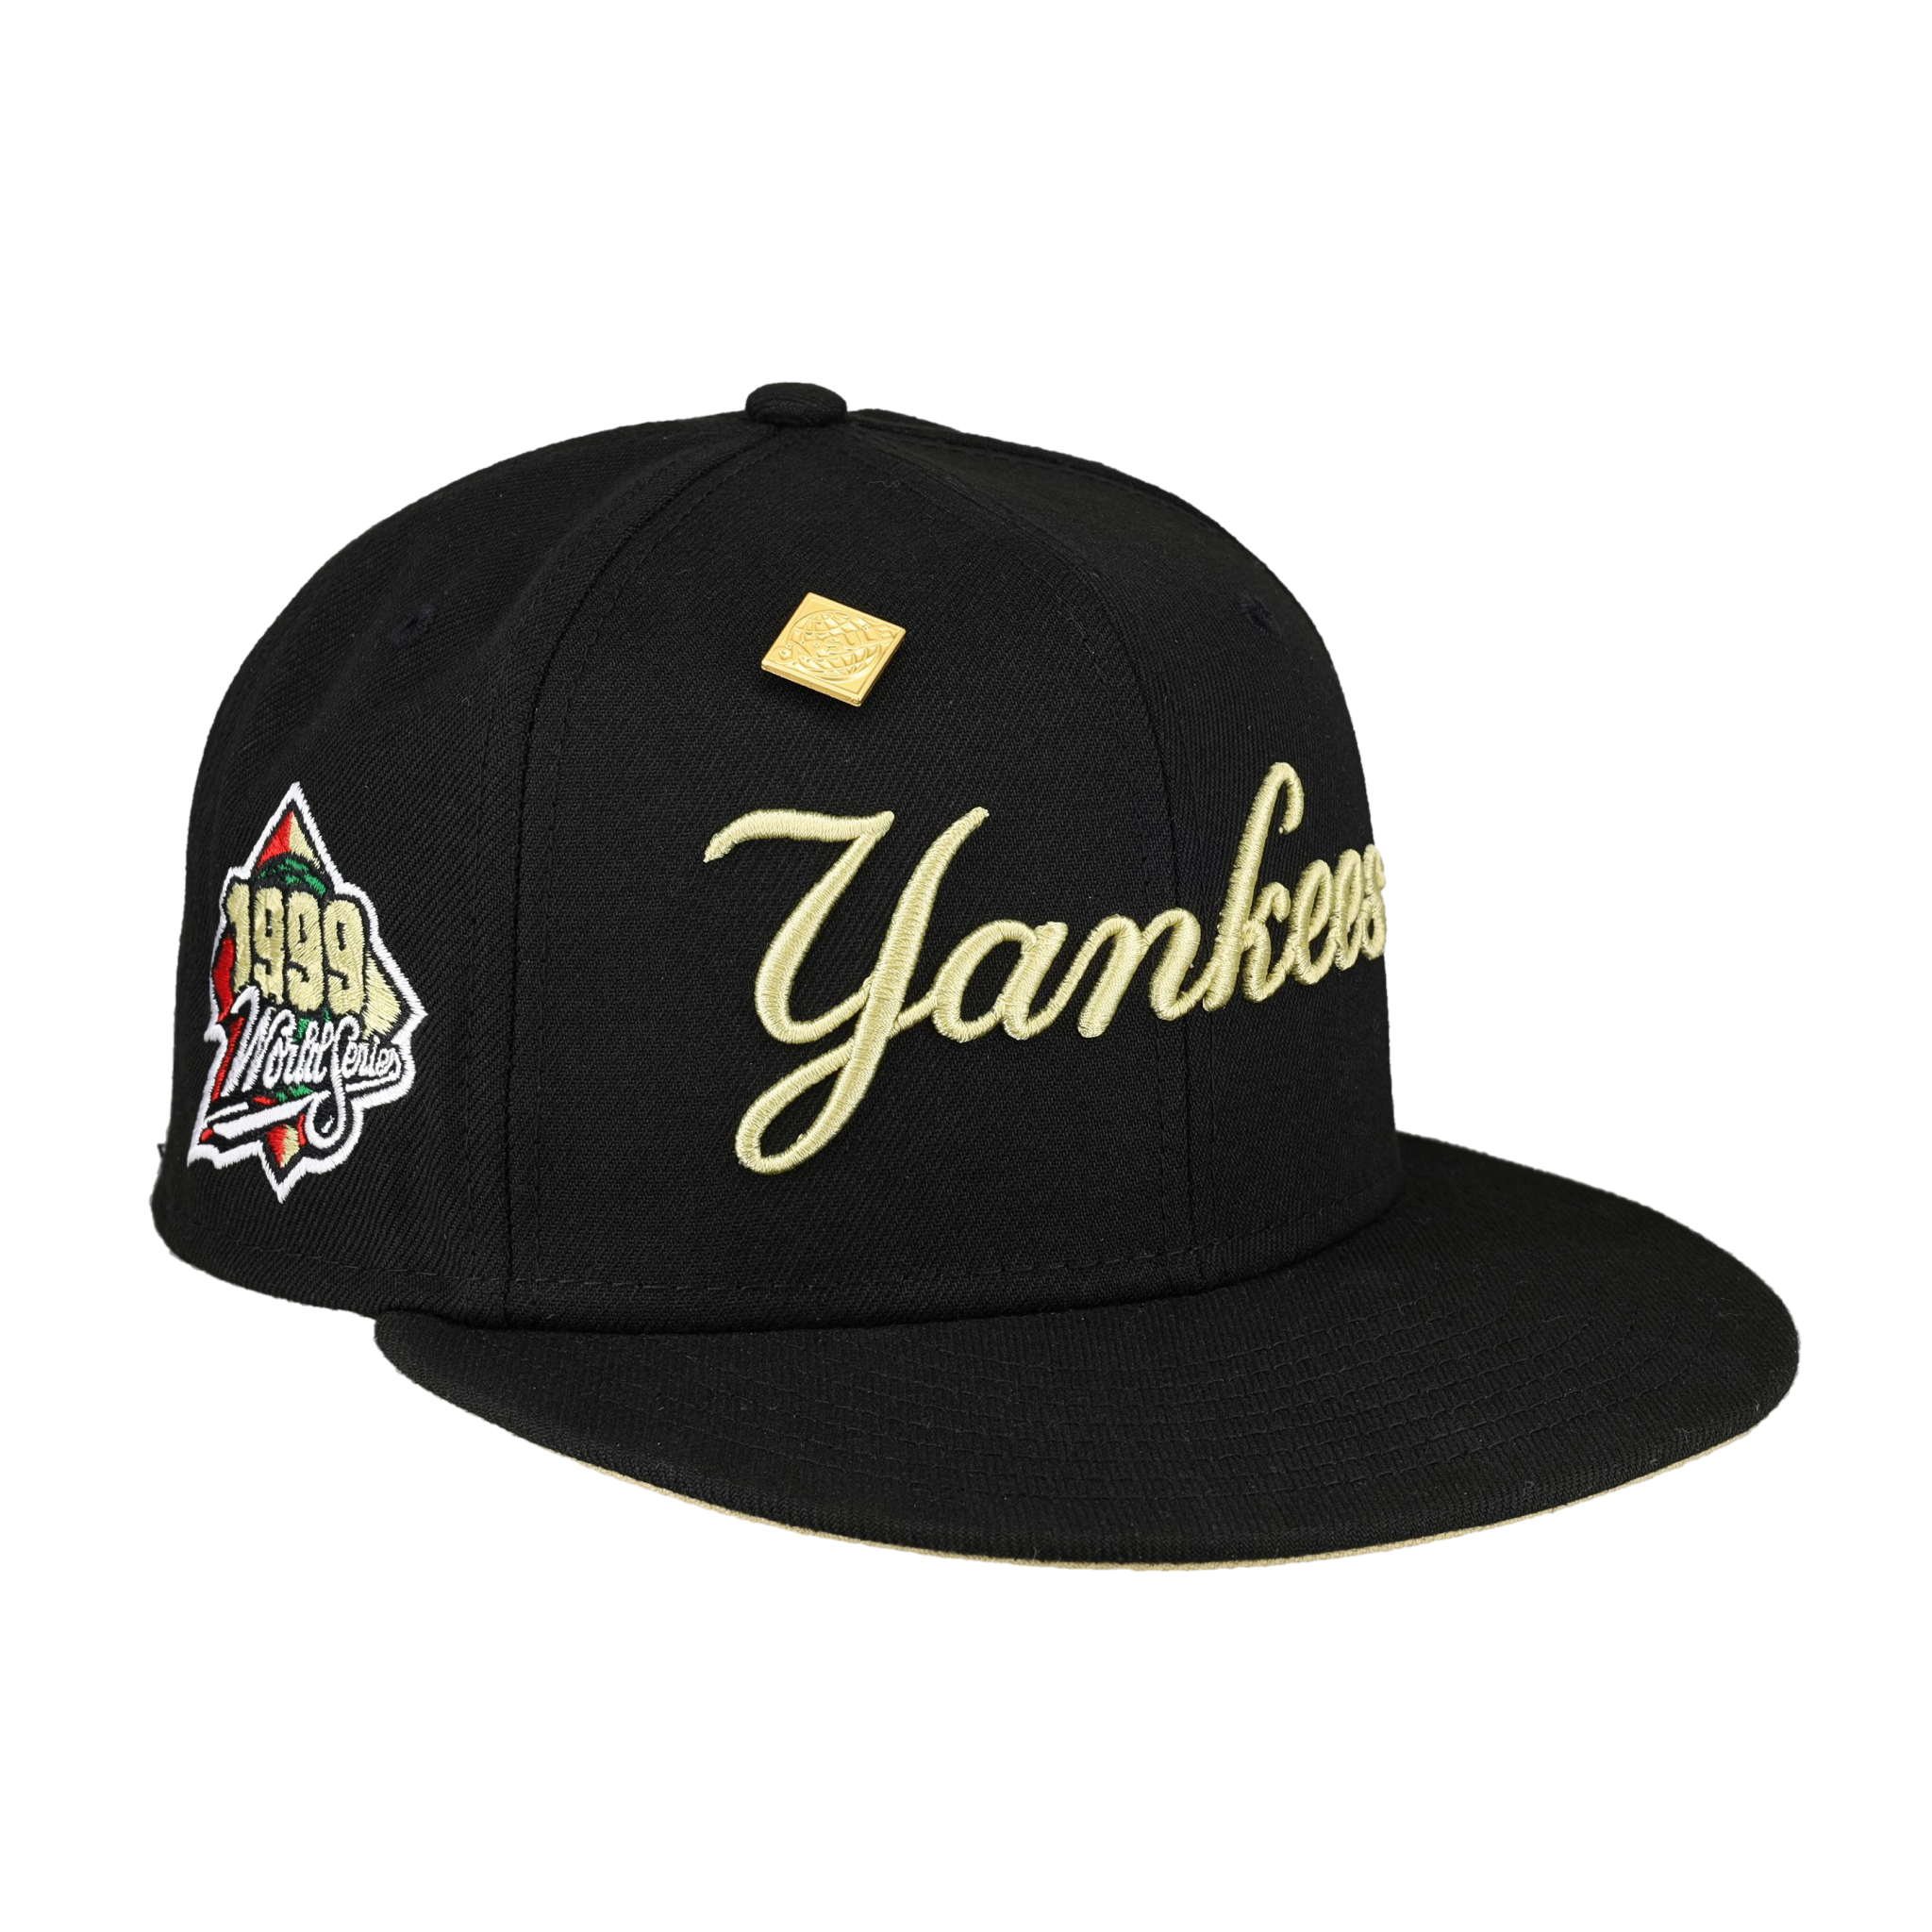 New Era New York Yankees Capsule Hats 1999 World Series 59Fifty